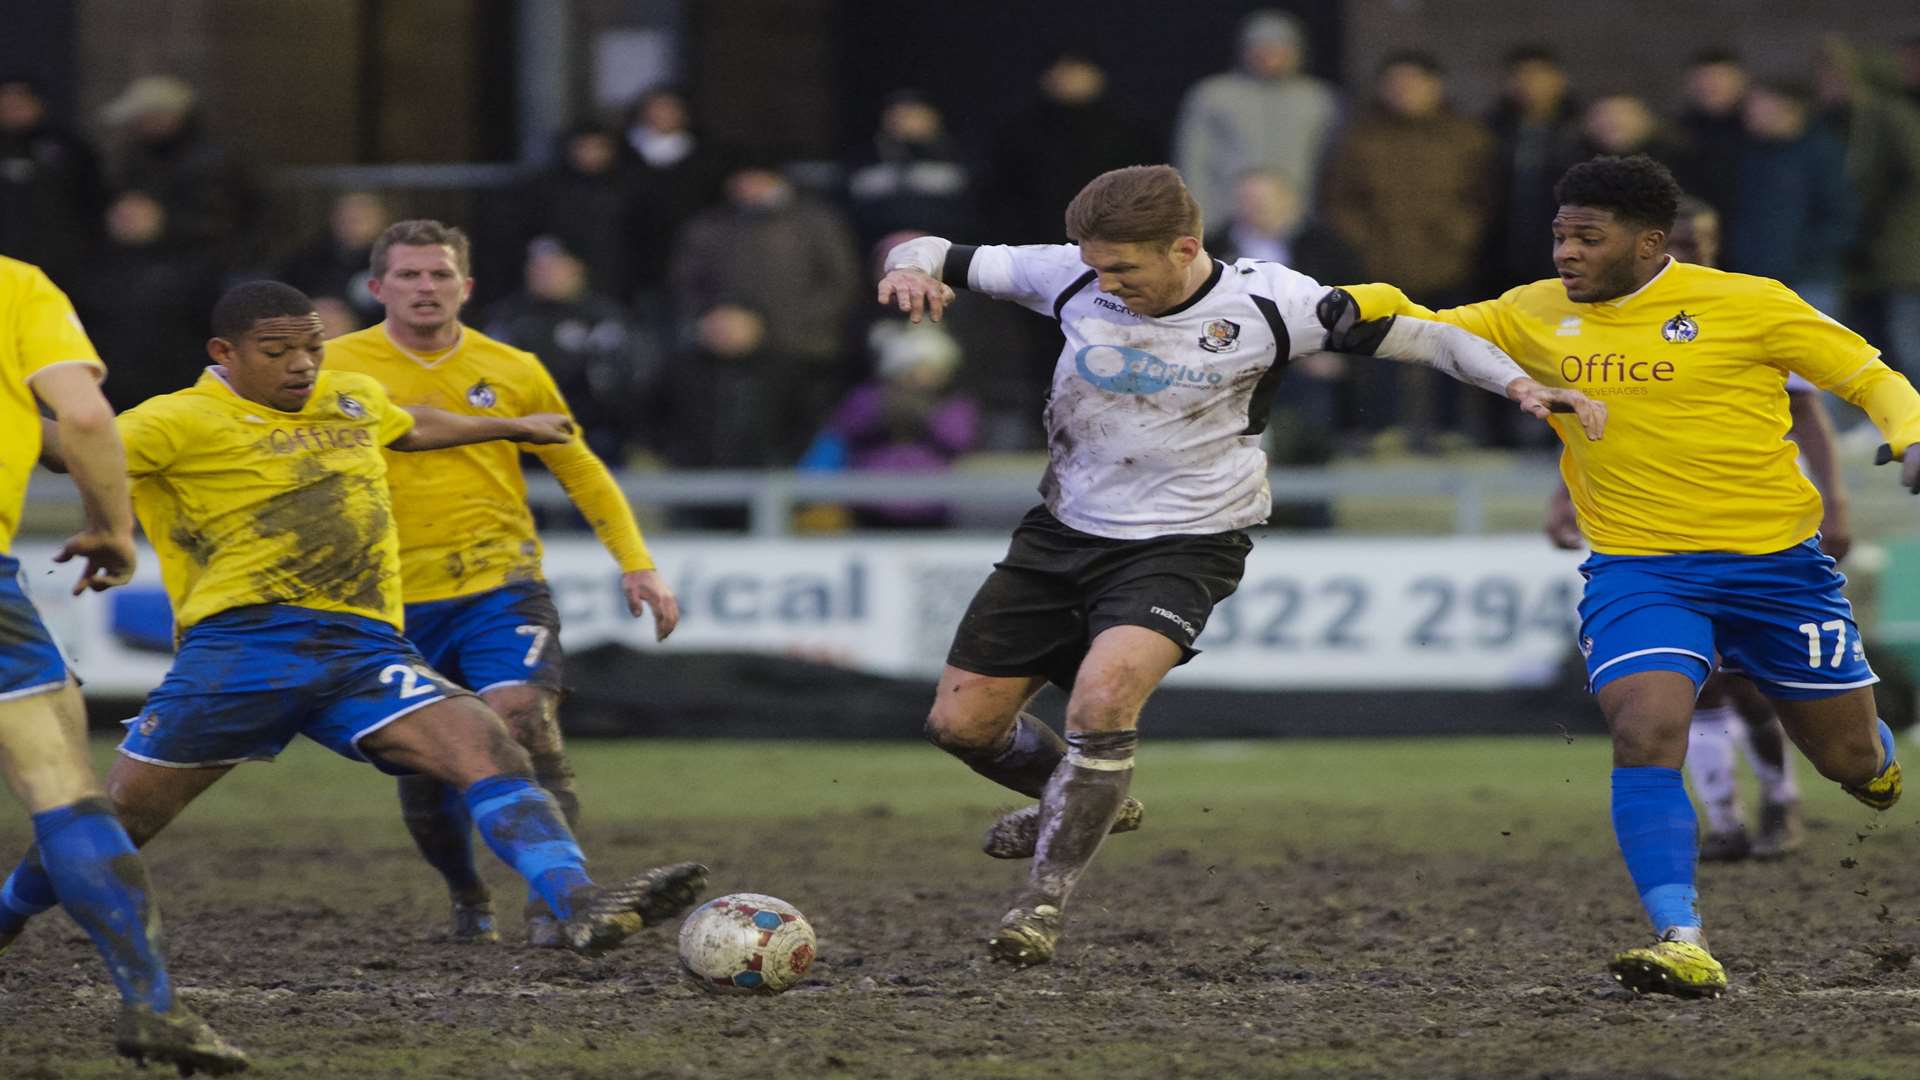 Elliot Bradbrook ploughs through the mud against Bristol Rovers last season Picture: Andy Payton